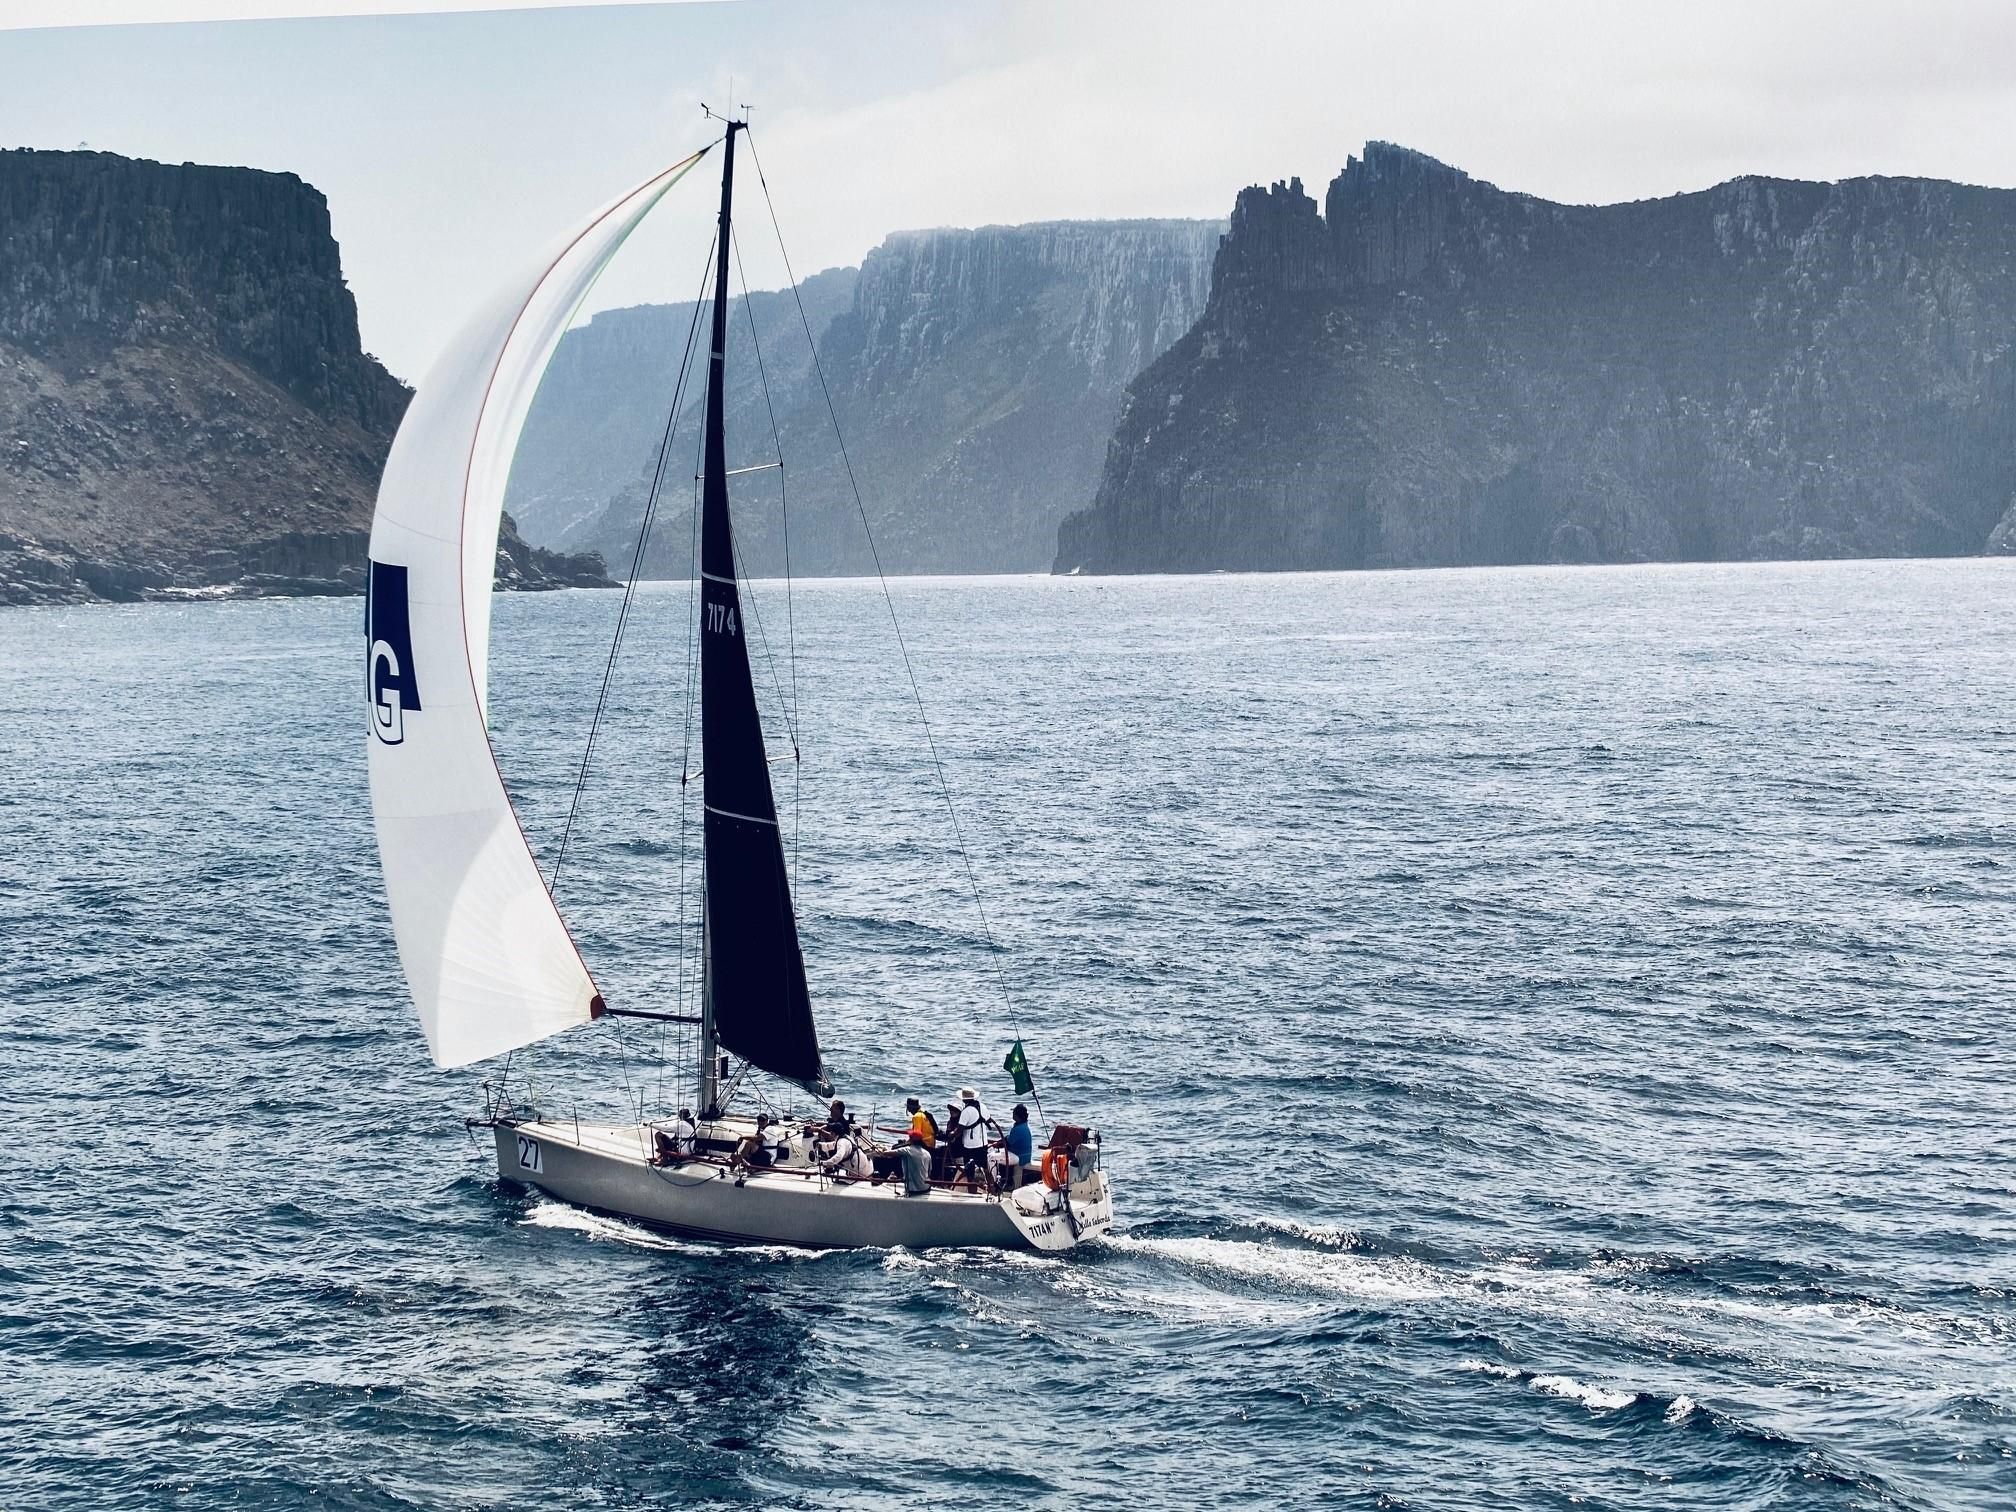 38 foot racing yacht